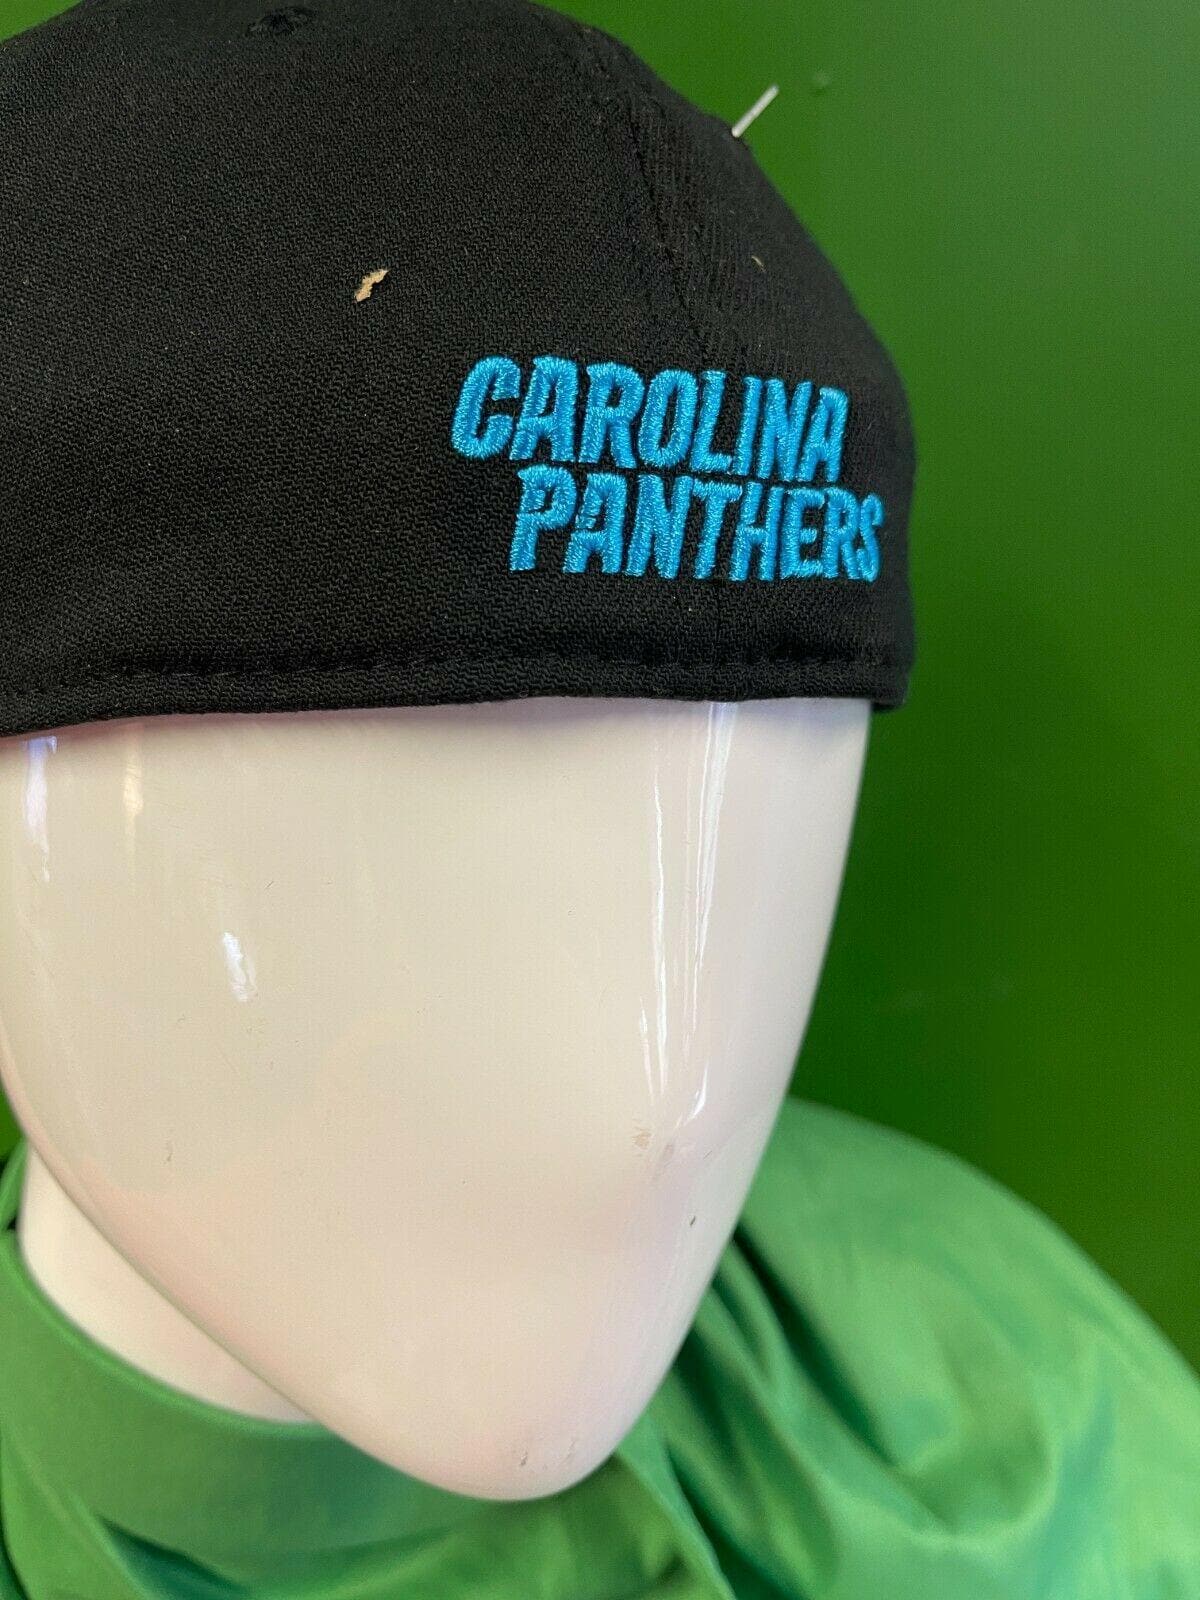 NFL Carolina Panthers New Era 39THIRTY Team Classics Cap Hat S-M NWT